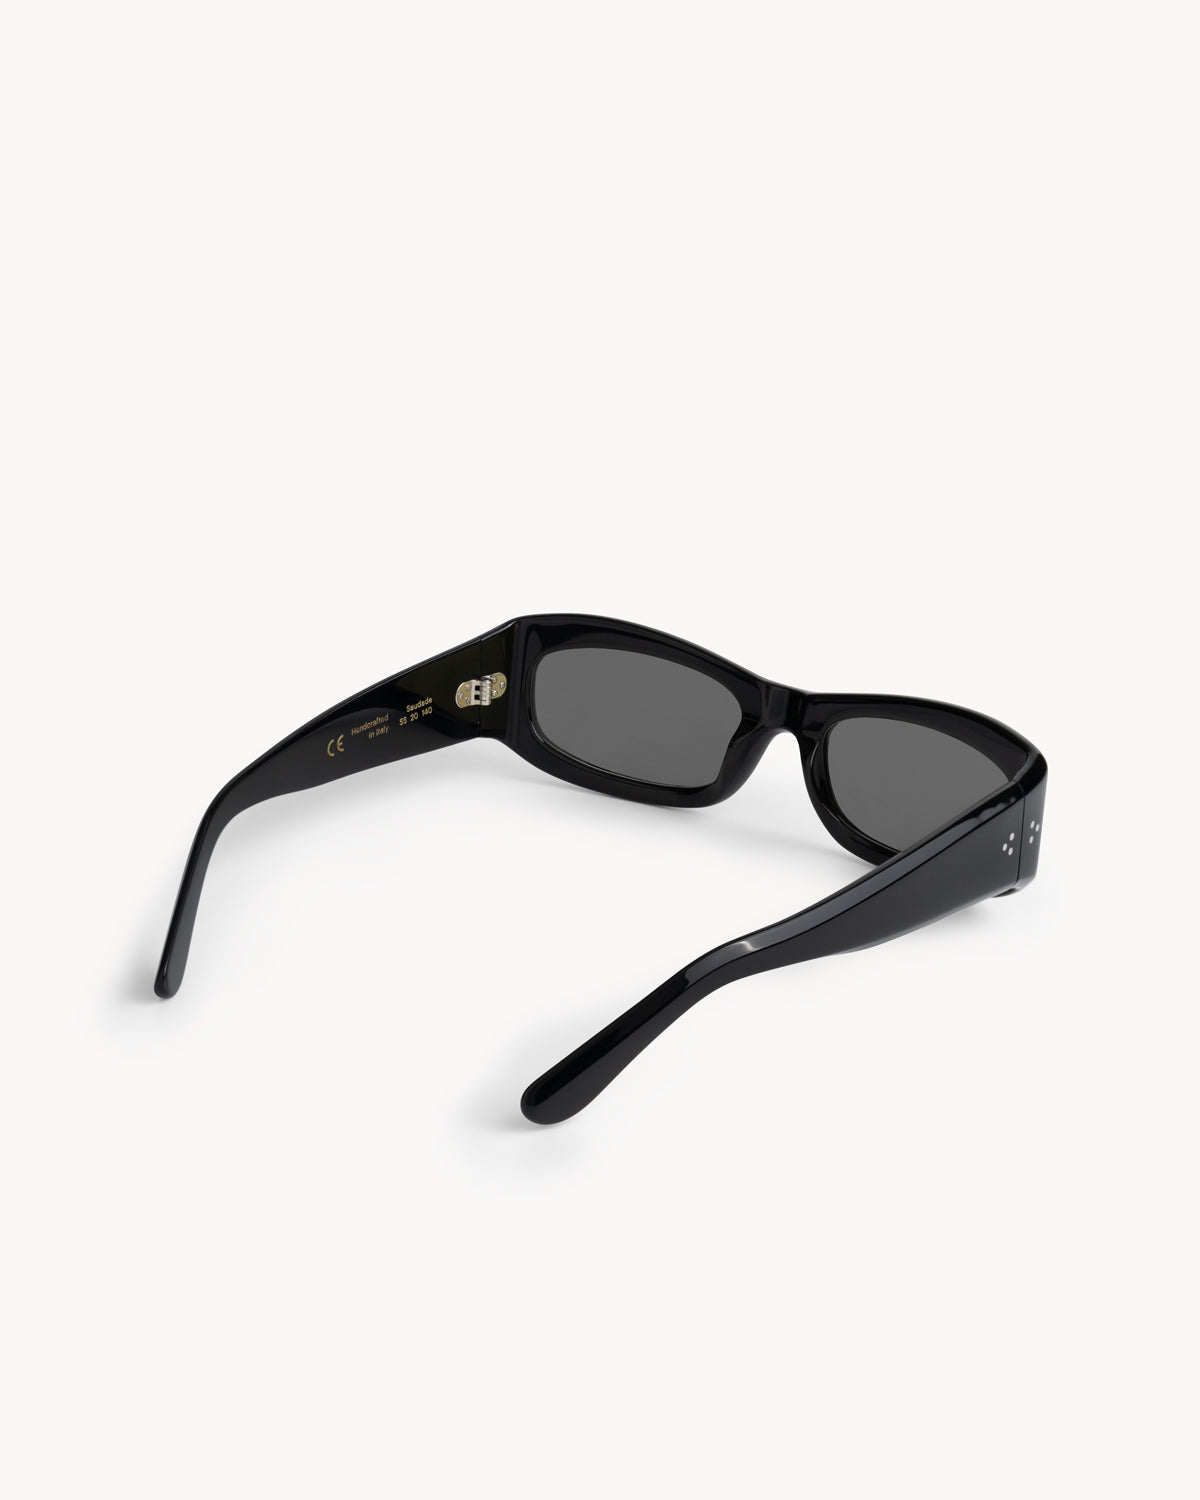 Port Tanger Saudade Sunglasses in Black Acetate and Black Lenses 3